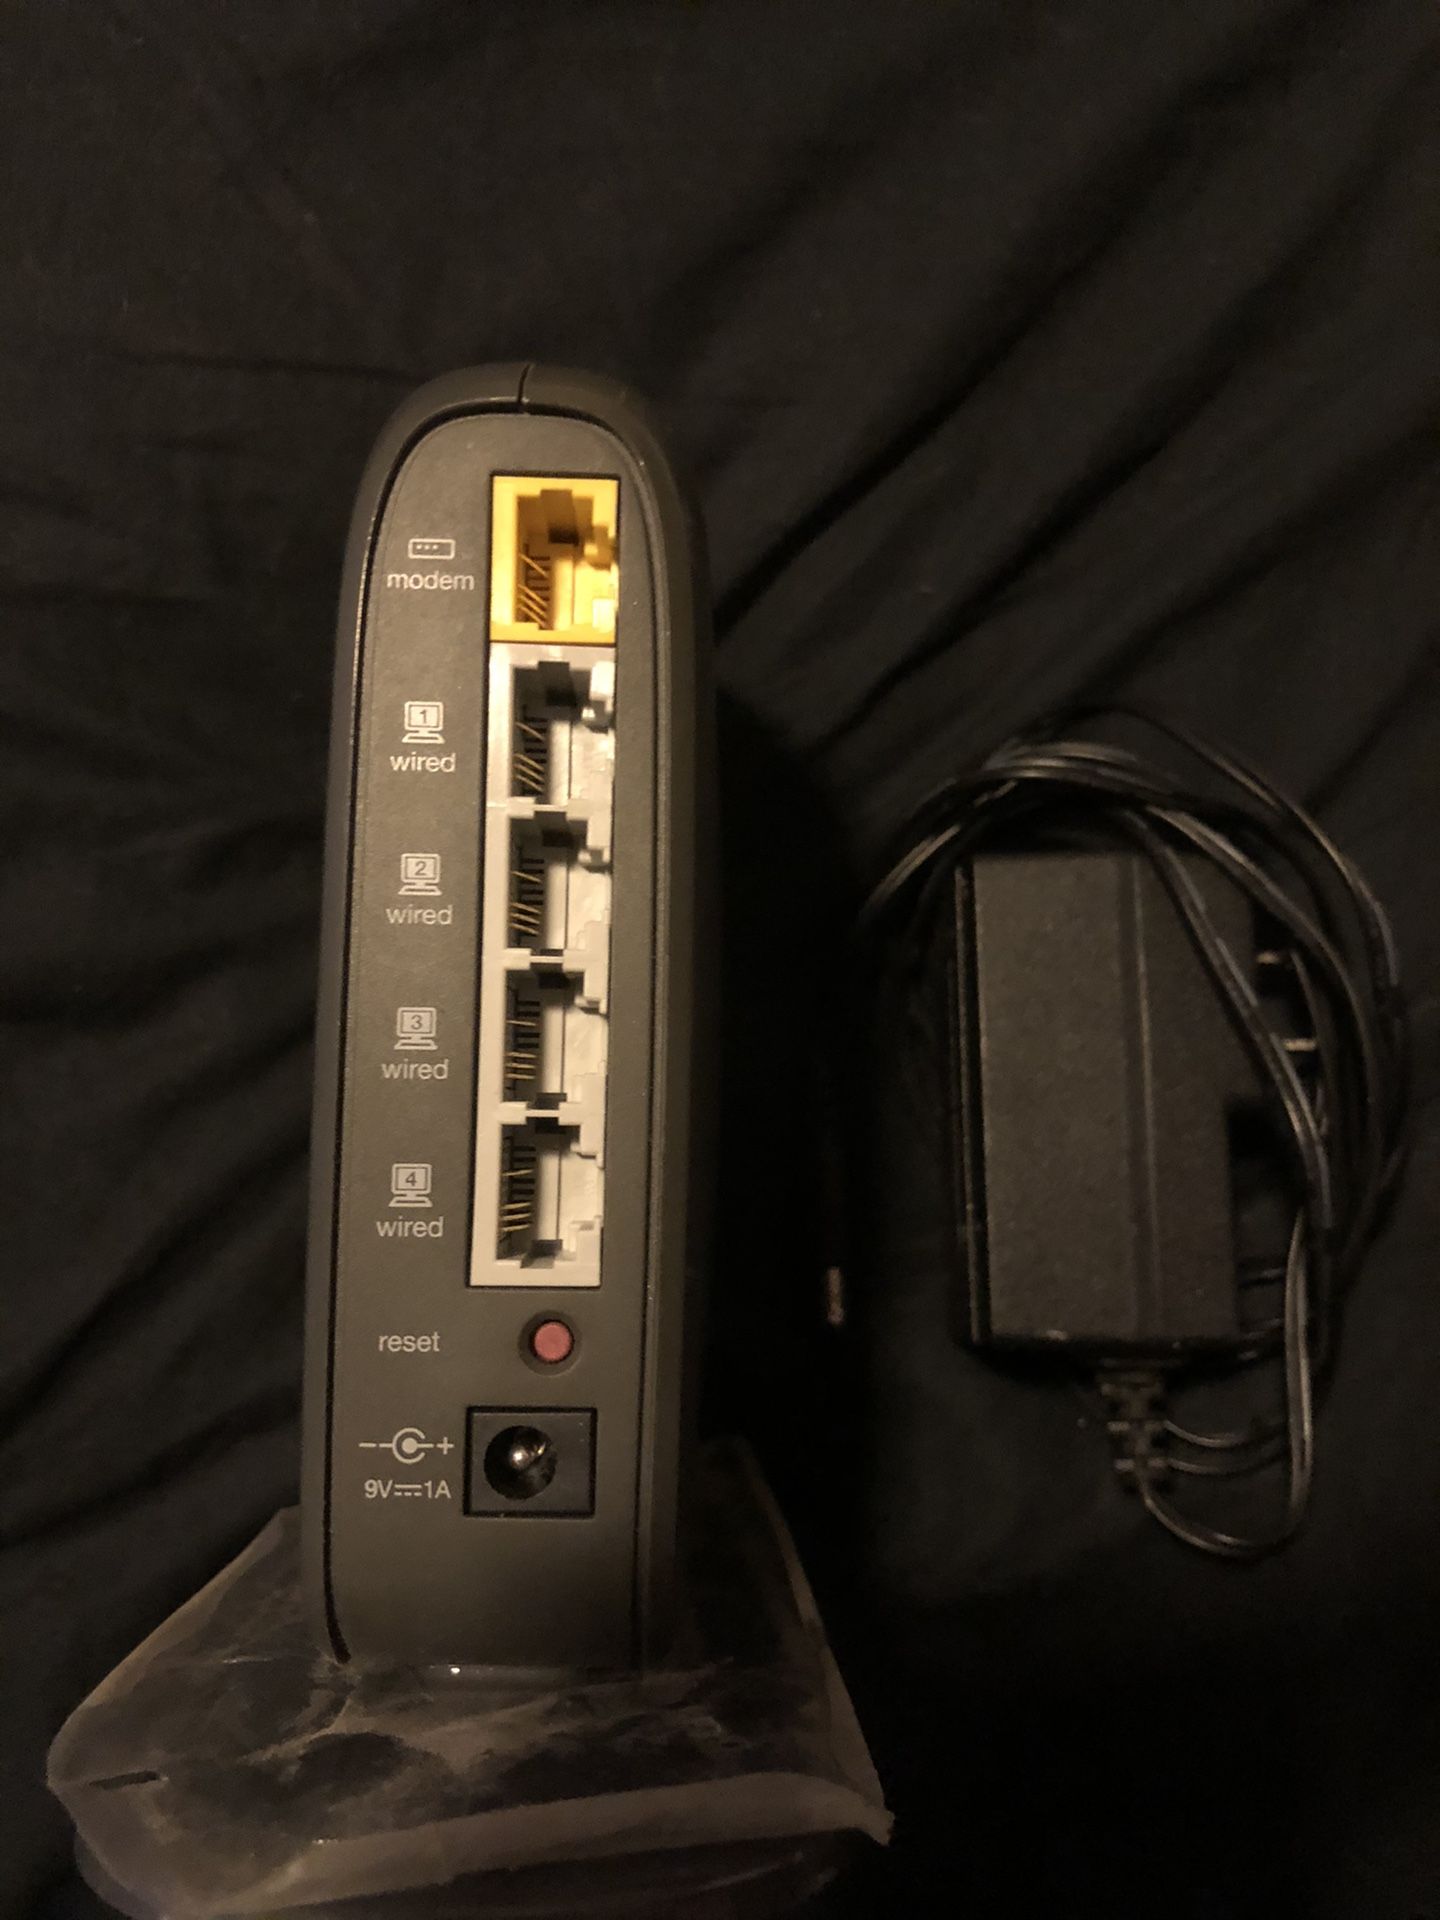 Belkin Router/modem w/ power cable